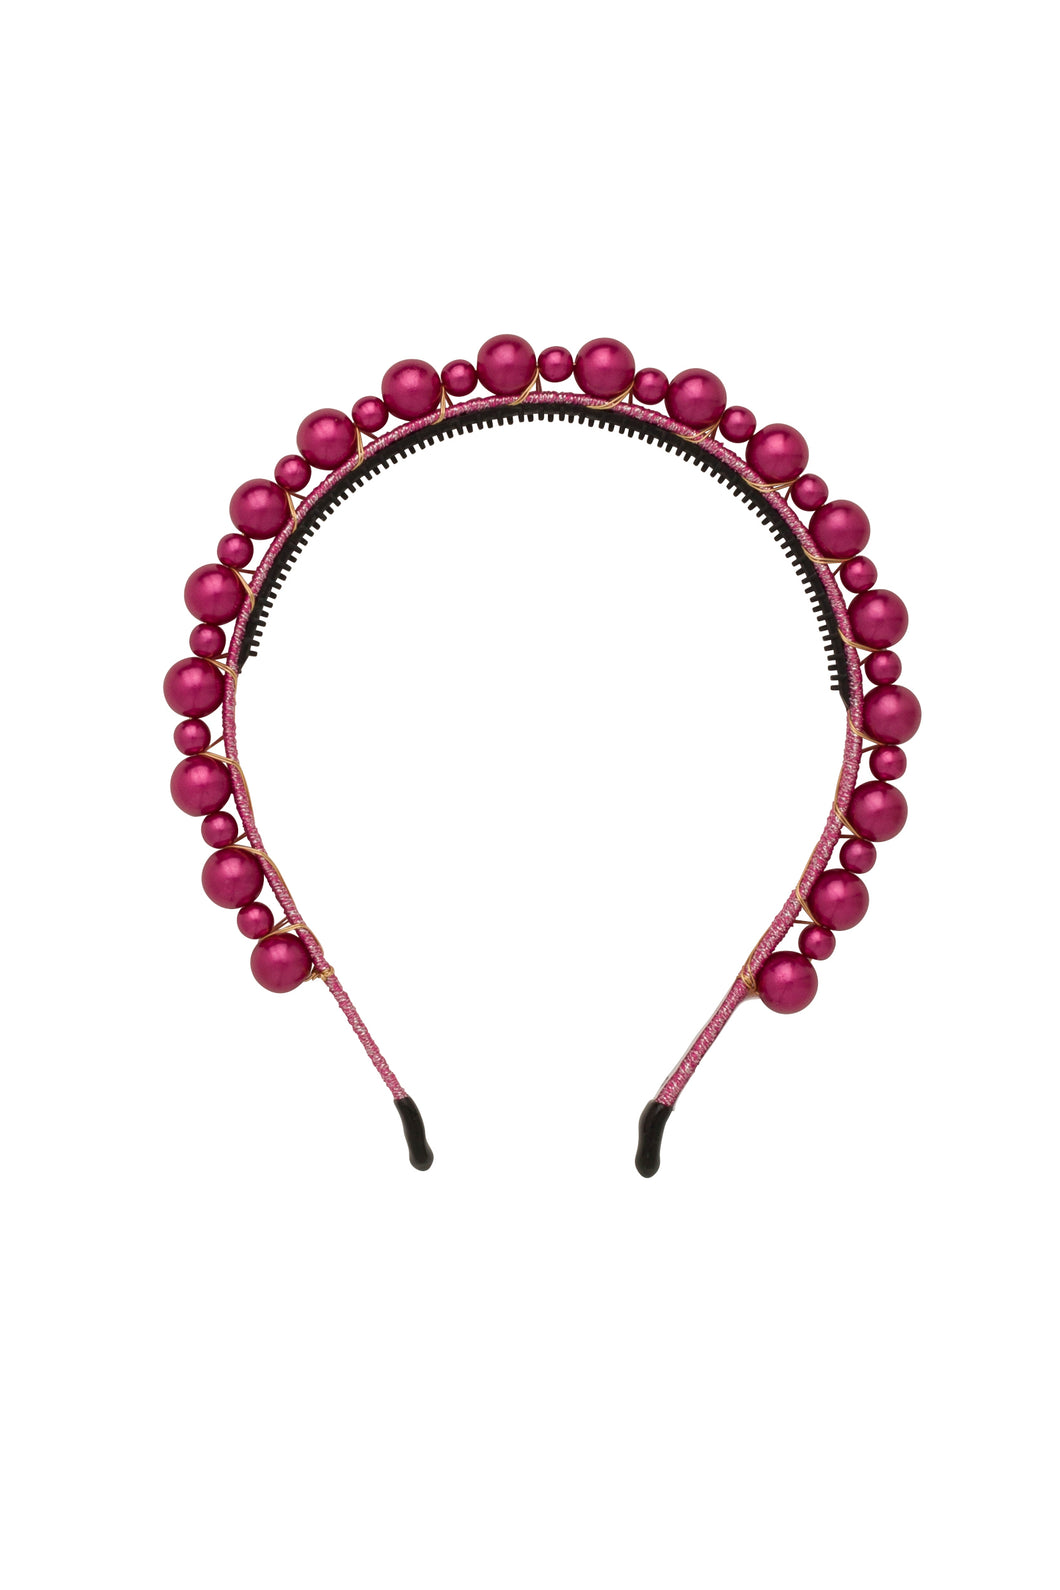 Uneven Pearls Headband - Cranberry